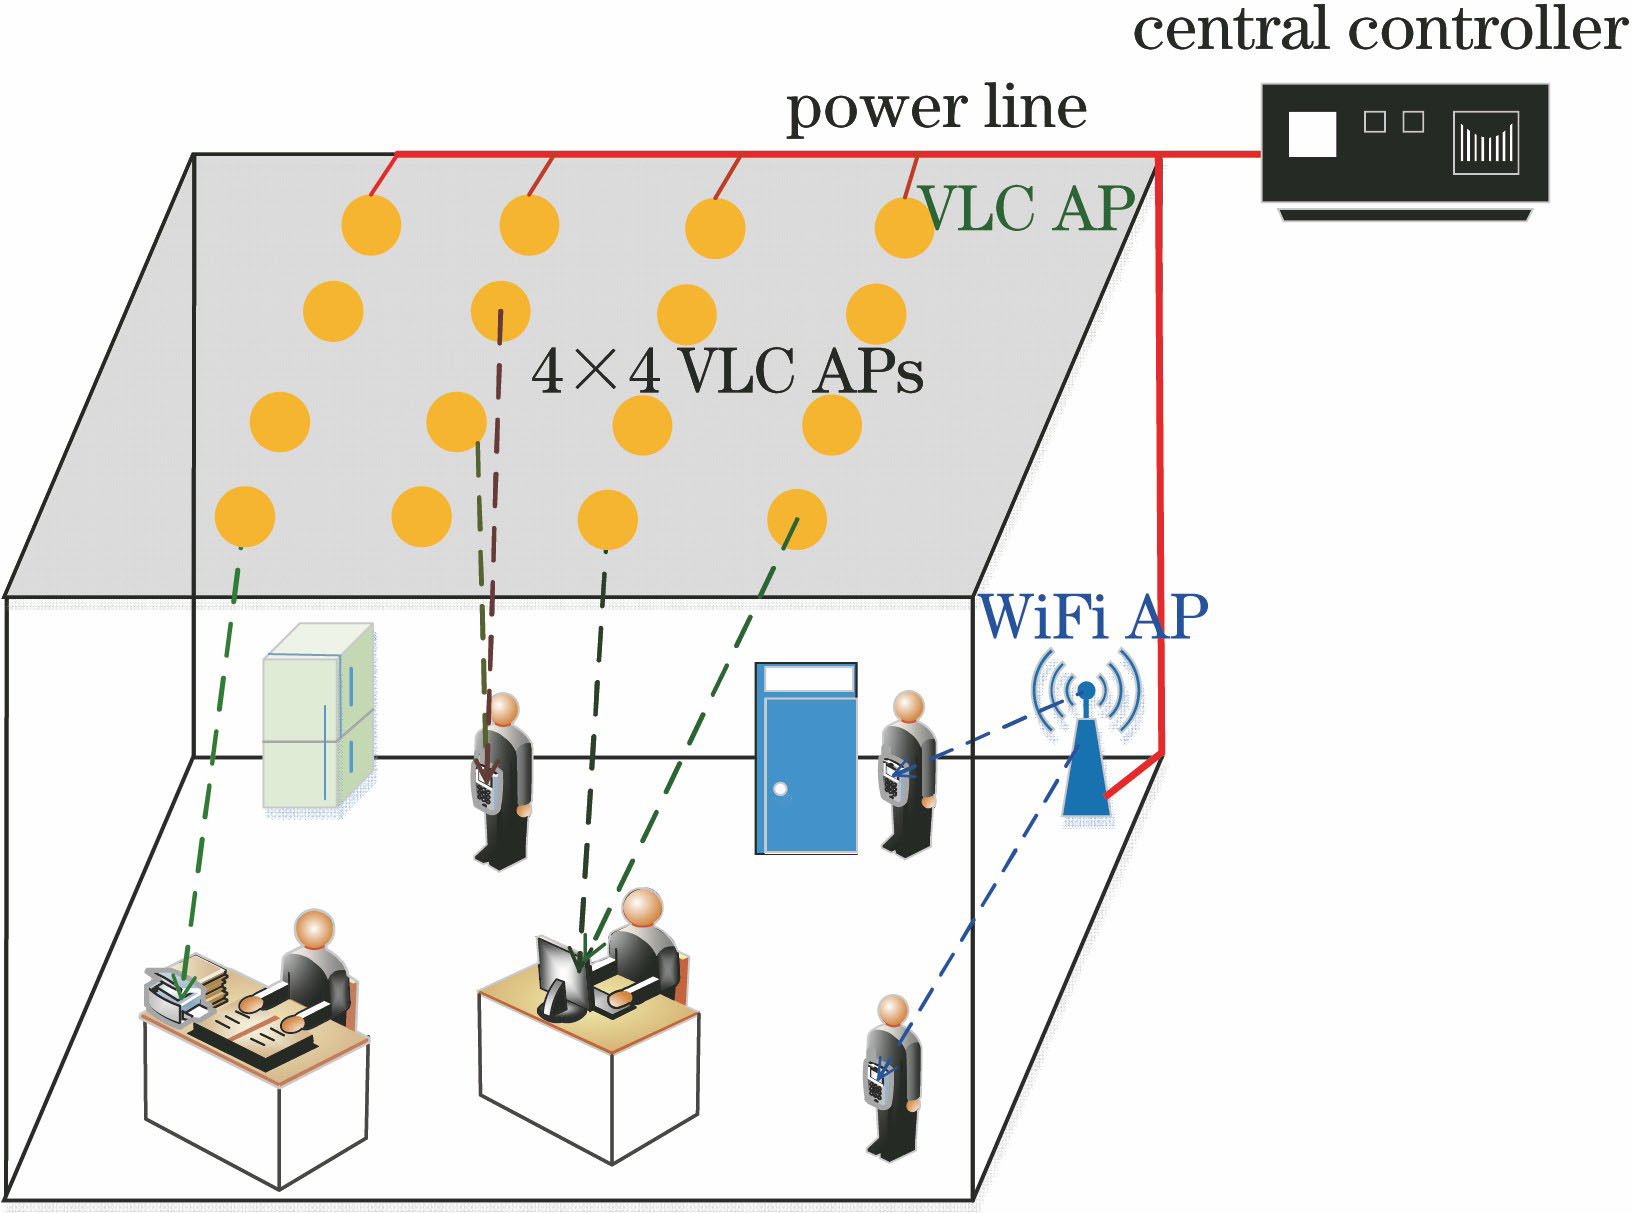 Downlink model of heterogeneous VLC/WiFi network